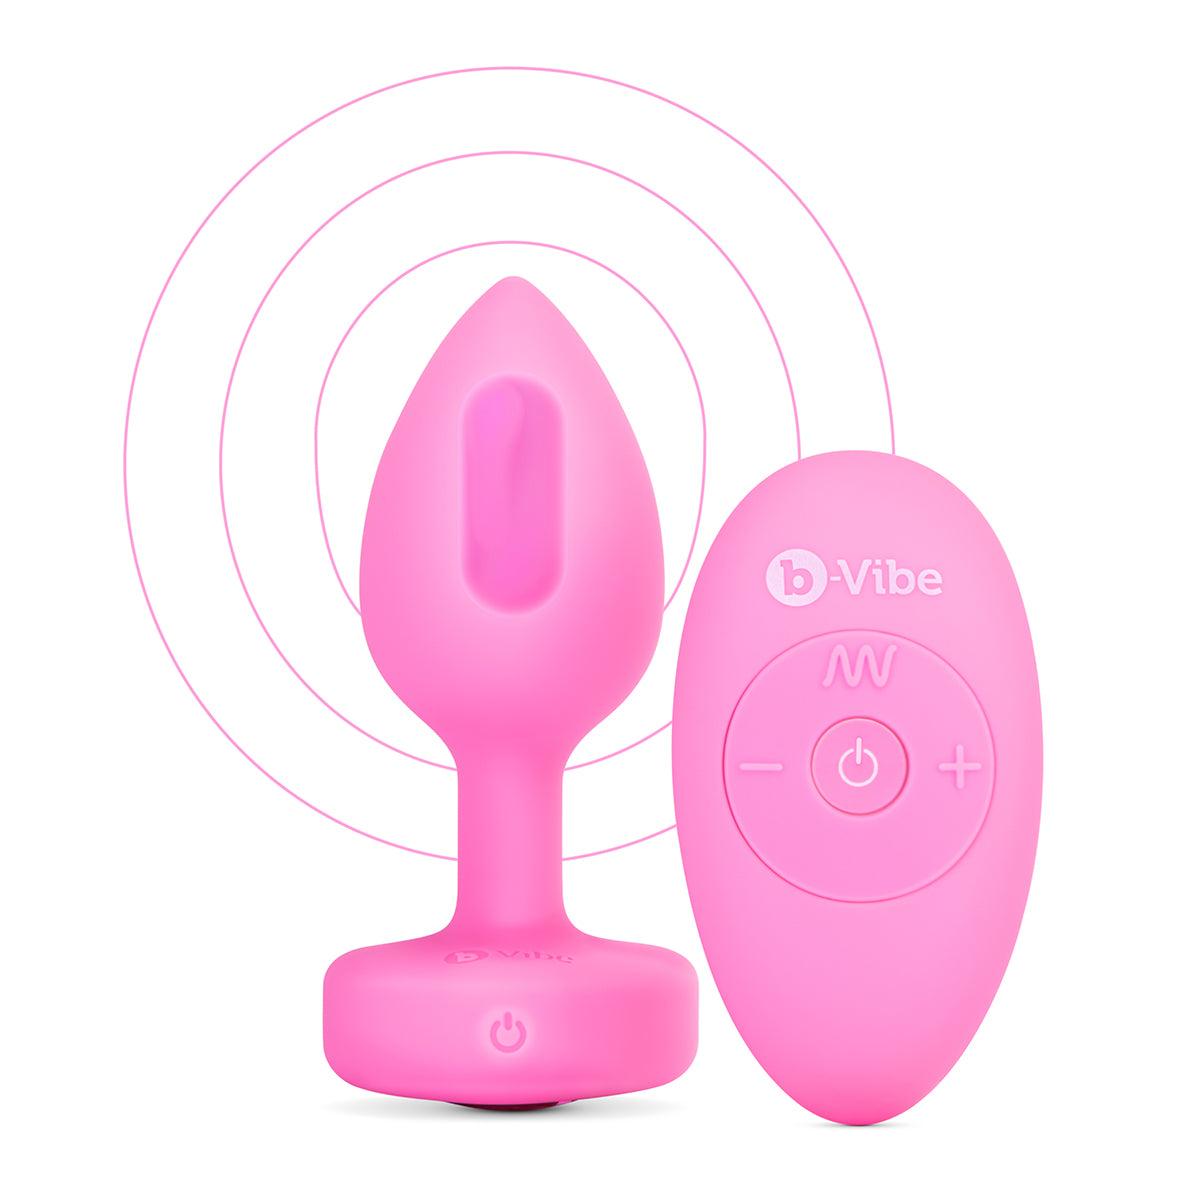 B-Vibe Vibrating Heart Plug Small/Medium - Pink Topaz - shop enby